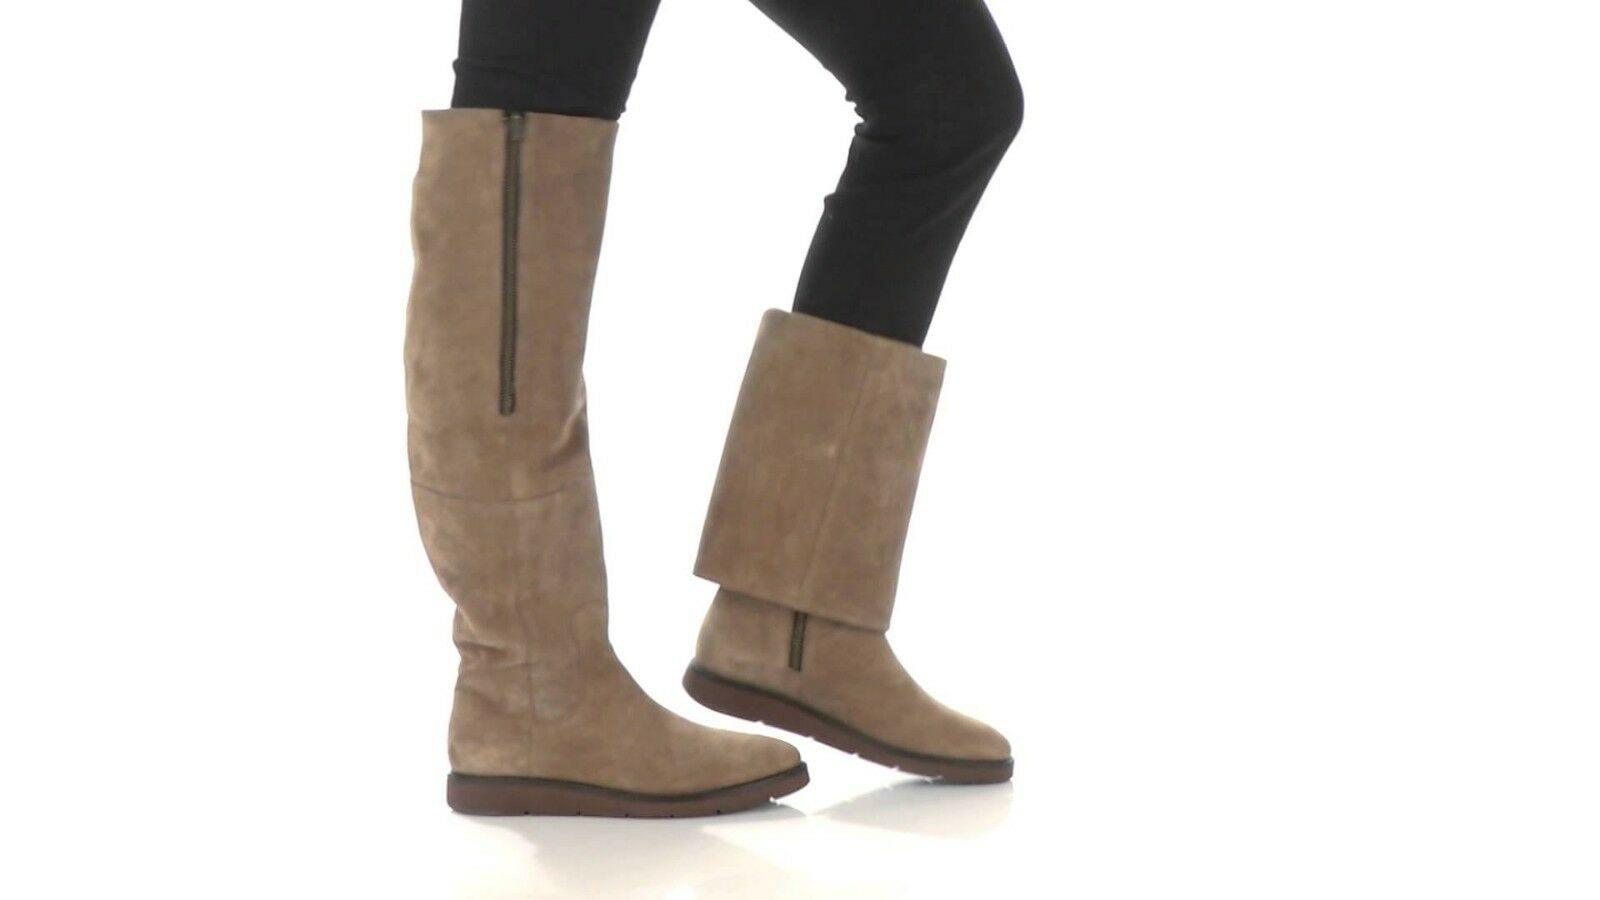 Johnston & Murphy Bree Women Cuffed Knee High Boots Stony Waxy Suede US 7 NEW - SVNYFancy